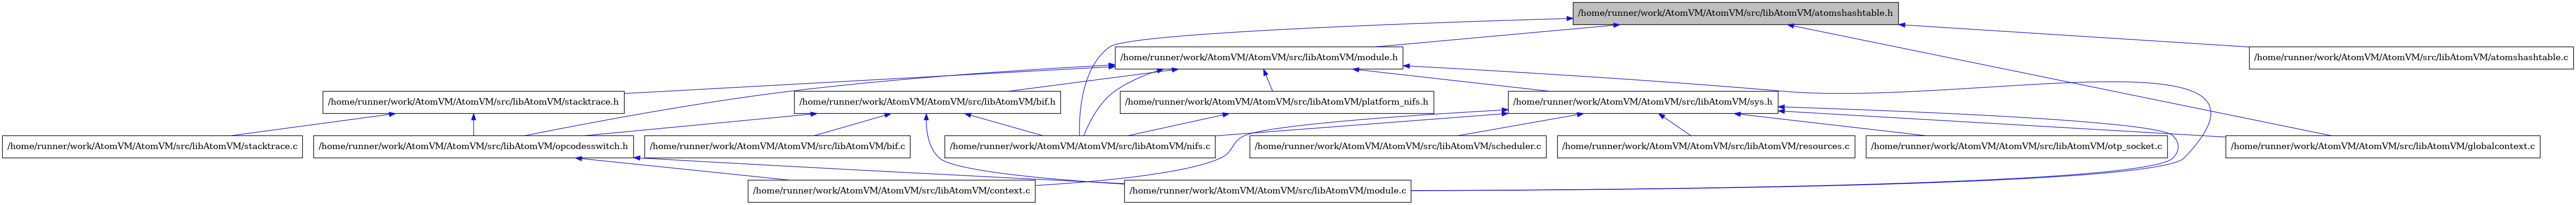 digraph {
    graph [bgcolor="#00000000"]
    node [shape=rectangle style=filled fillcolor="#FFFFFF" font=Helvetica padding=2]
    edge [color="#1414CE"]
    "6" [label="/home/runner/work/AtomVM/AtomVM/src/libAtomVM/bif.c" tooltip="/home/runner/work/AtomVM/AtomVM/src/libAtomVM/bif.c"]
    "5" [label="/home/runner/work/AtomVM/AtomVM/src/libAtomVM/bif.h" tooltip="/home/runner/work/AtomVM/AtomVM/src/libAtomVM/bif.h"]
    "11" [label="/home/runner/work/AtomVM/AtomVM/src/libAtomVM/platform_nifs.h" tooltip="/home/runner/work/AtomVM/AtomVM/src/libAtomVM/platform_nifs.h"]
    "17" [label="/home/runner/work/AtomVM/AtomVM/src/libAtomVM/scheduler.c" tooltip="/home/runner/work/AtomVM/AtomVM/src/libAtomVM/scheduler.c"]
    "10" [label="/home/runner/work/AtomVM/AtomVM/src/libAtomVM/context.c" tooltip="/home/runner/work/AtomVM/AtomVM/src/libAtomVM/context.c"]
    "13" [label="/home/runner/work/AtomVM/AtomVM/src/libAtomVM/stacktrace.c" tooltip="/home/runner/work/AtomVM/AtomVM/src/libAtomVM/stacktrace.c"]
    "12" [label="/home/runner/work/AtomVM/AtomVM/src/libAtomVM/stacktrace.h" tooltip="/home/runner/work/AtomVM/AtomVM/src/libAtomVM/stacktrace.h"]
    "7" [label="/home/runner/work/AtomVM/AtomVM/src/libAtomVM/module.c" tooltip="/home/runner/work/AtomVM/AtomVM/src/libAtomVM/module.c"]
    "4" [label="/home/runner/work/AtomVM/AtomVM/src/libAtomVM/module.h" tooltip="/home/runner/work/AtomVM/AtomVM/src/libAtomVM/module.h"]
    "16" [label="/home/runner/work/AtomVM/AtomVM/src/libAtomVM/resources.c" tooltip="/home/runner/work/AtomVM/AtomVM/src/libAtomVM/resources.c"]
    "14" [label="/home/runner/work/AtomVM/AtomVM/src/libAtomVM/sys.h" tooltip="/home/runner/work/AtomVM/AtomVM/src/libAtomVM/sys.h"]
    "2" [label="/home/runner/work/AtomVM/AtomVM/src/libAtomVM/atomshashtable.c" tooltip="/home/runner/work/AtomVM/AtomVM/src/libAtomVM/atomshashtable.c"]
    "1" [label="/home/runner/work/AtomVM/AtomVM/src/libAtomVM/atomshashtable.h" tooltip="/home/runner/work/AtomVM/AtomVM/src/libAtomVM/atomshashtable.h" fillcolor="#BFBFBF"]
    "8" [label="/home/runner/work/AtomVM/AtomVM/src/libAtomVM/nifs.c" tooltip="/home/runner/work/AtomVM/AtomVM/src/libAtomVM/nifs.c"]
    "9" [label="/home/runner/work/AtomVM/AtomVM/src/libAtomVM/opcodesswitch.h" tooltip="/home/runner/work/AtomVM/AtomVM/src/libAtomVM/opcodesswitch.h"]
    "3" [label="/home/runner/work/AtomVM/AtomVM/src/libAtomVM/globalcontext.c" tooltip="/home/runner/work/AtomVM/AtomVM/src/libAtomVM/globalcontext.c"]
    "15" [label="/home/runner/work/AtomVM/AtomVM/src/libAtomVM/otp_socket.c" tooltip="/home/runner/work/AtomVM/AtomVM/src/libAtomVM/otp_socket.c"]
    "5" -> "6" [dir=back tooltip="include"]
    "5" -> "7" [dir=back tooltip="include"]
    "5" -> "8" [dir=back tooltip="include"]
    "5" -> "9" [dir=back tooltip="include"]
    "11" -> "8" [dir=back tooltip="include"]
    "12" -> "9" [dir=back tooltip="include"]
    "12" -> "13" [dir=back tooltip="include"]
    "4" -> "5" [dir=back tooltip="include"]
    "4" -> "7" [dir=back tooltip="include"]
    "4" -> "8" [dir=back tooltip="include"]
    "4" -> "9" [dir=back tooltip="include"]
    "4" -> "11" [dir=back tooltip="include"]
    "4" -> "12" [dir=back tooltip="include"]
    "4" -> "14" [dir=back tooltip="include"]
    "14" -> "10" [dir=back tooltip="include"]
    "14" -> "3" [dir=back tooltip="include"]
    "14" -> "7" [dir=back tooltip="include"]
    "14" -> "8" [dir=back tooltip="include"]
    "14" -> "15" [dir=back tooltip="include"]
    "14" -> "16" [dir=back tooltip="include"]
    "14" -> "17" [dir=back tooltip="include"]
    "1" -> "2" [dir=back tooltip="include"]
    "1" -> "3" [dir=back tooltip="include"]
    "1" -> "4" [dir=back tooltip="include"]
    "1" -> "8" [dir=back tooltip="include"]
    "9" -> "10" [dir=back tooltip="include"]
    "9" -> "7" [dir=back tooltip="include"]
}